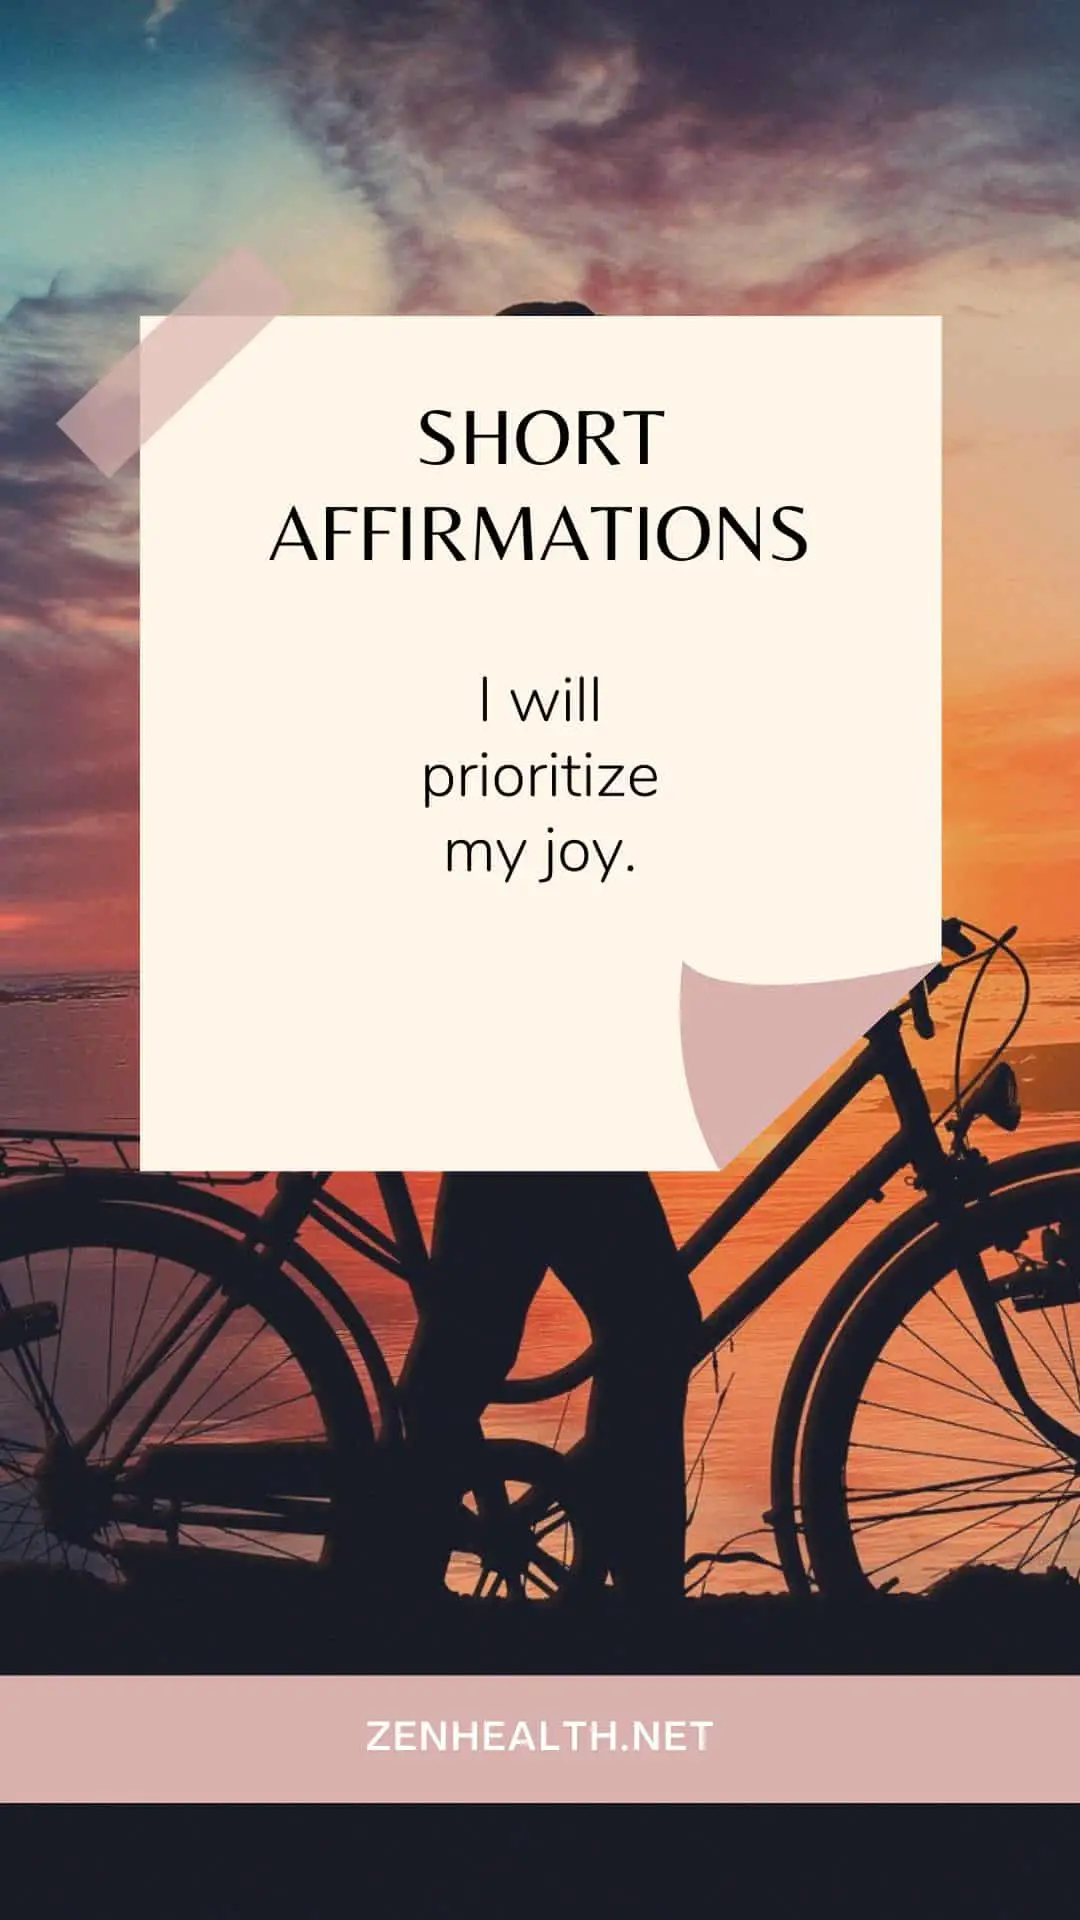 short affirmations: I will prioritize my joy